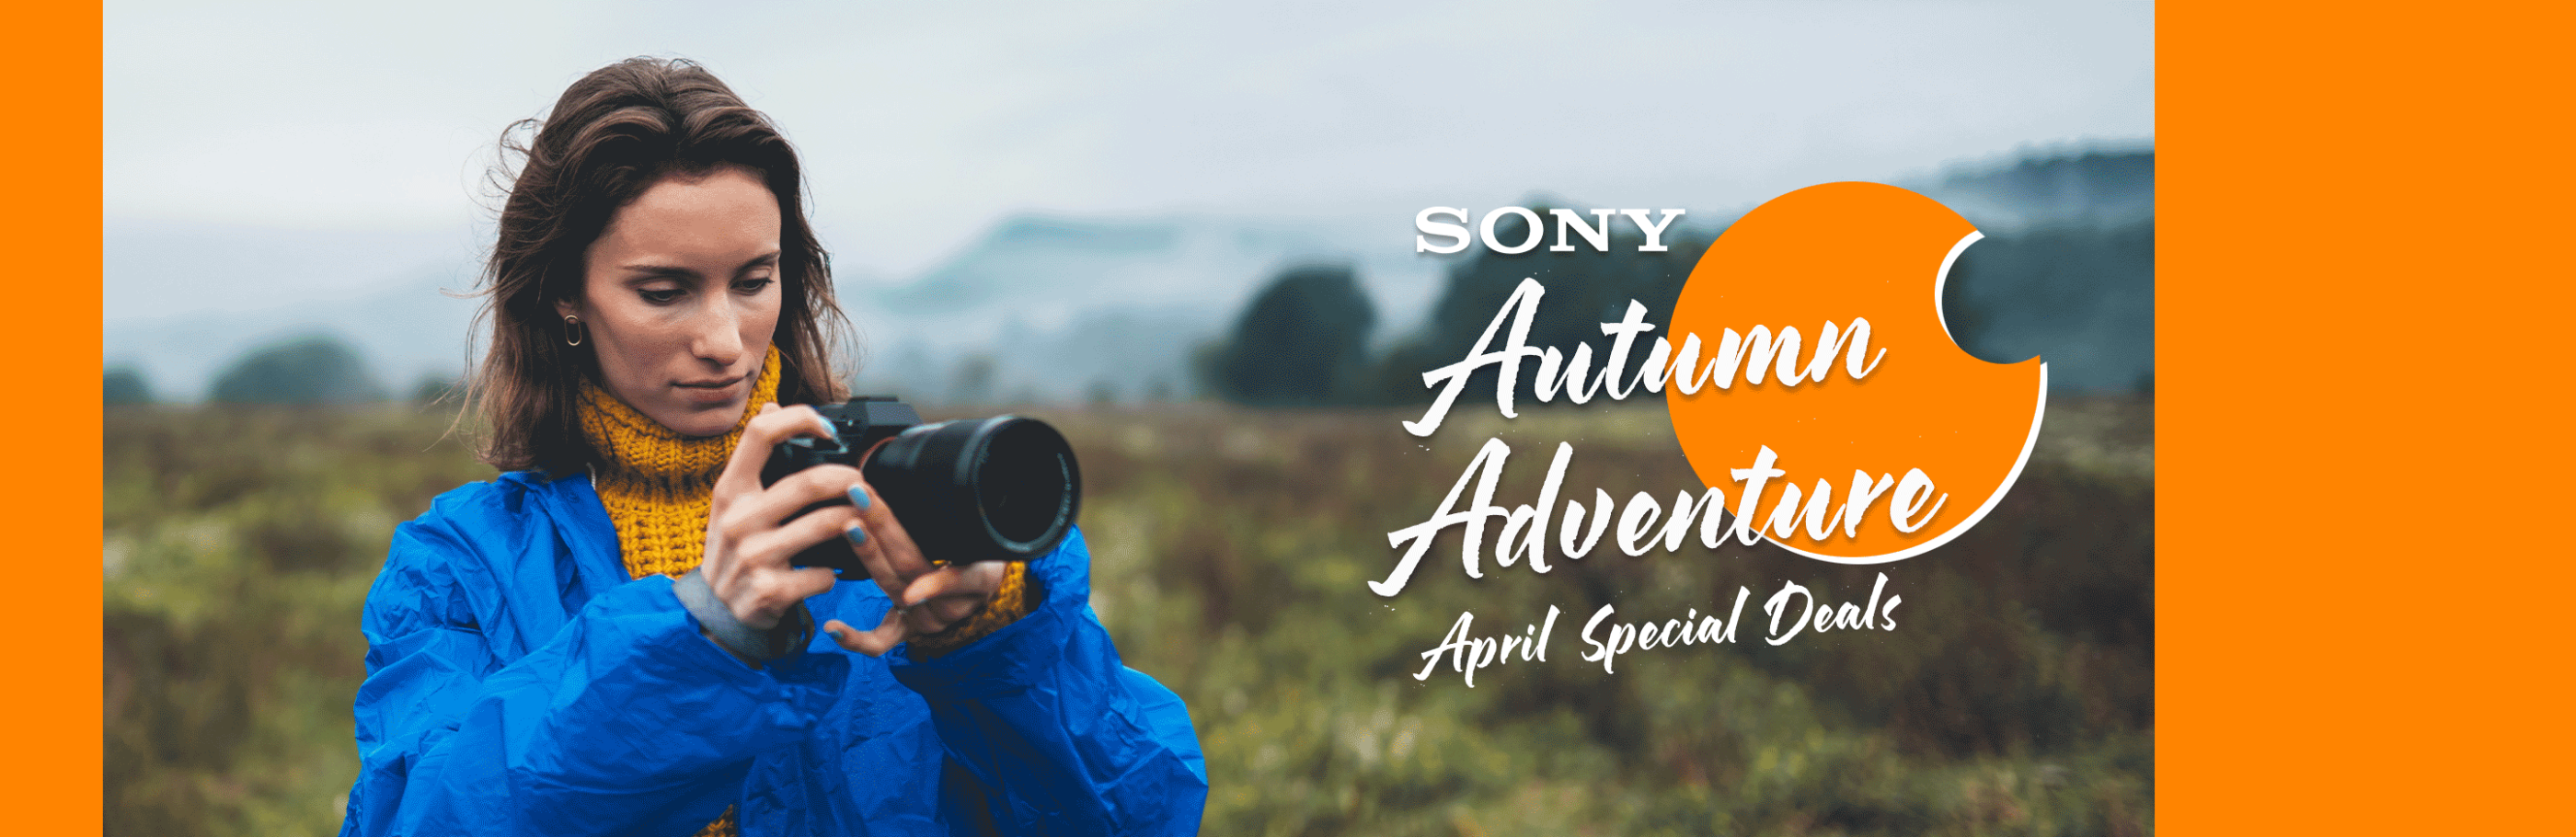 Sony Autumn Adventure Special